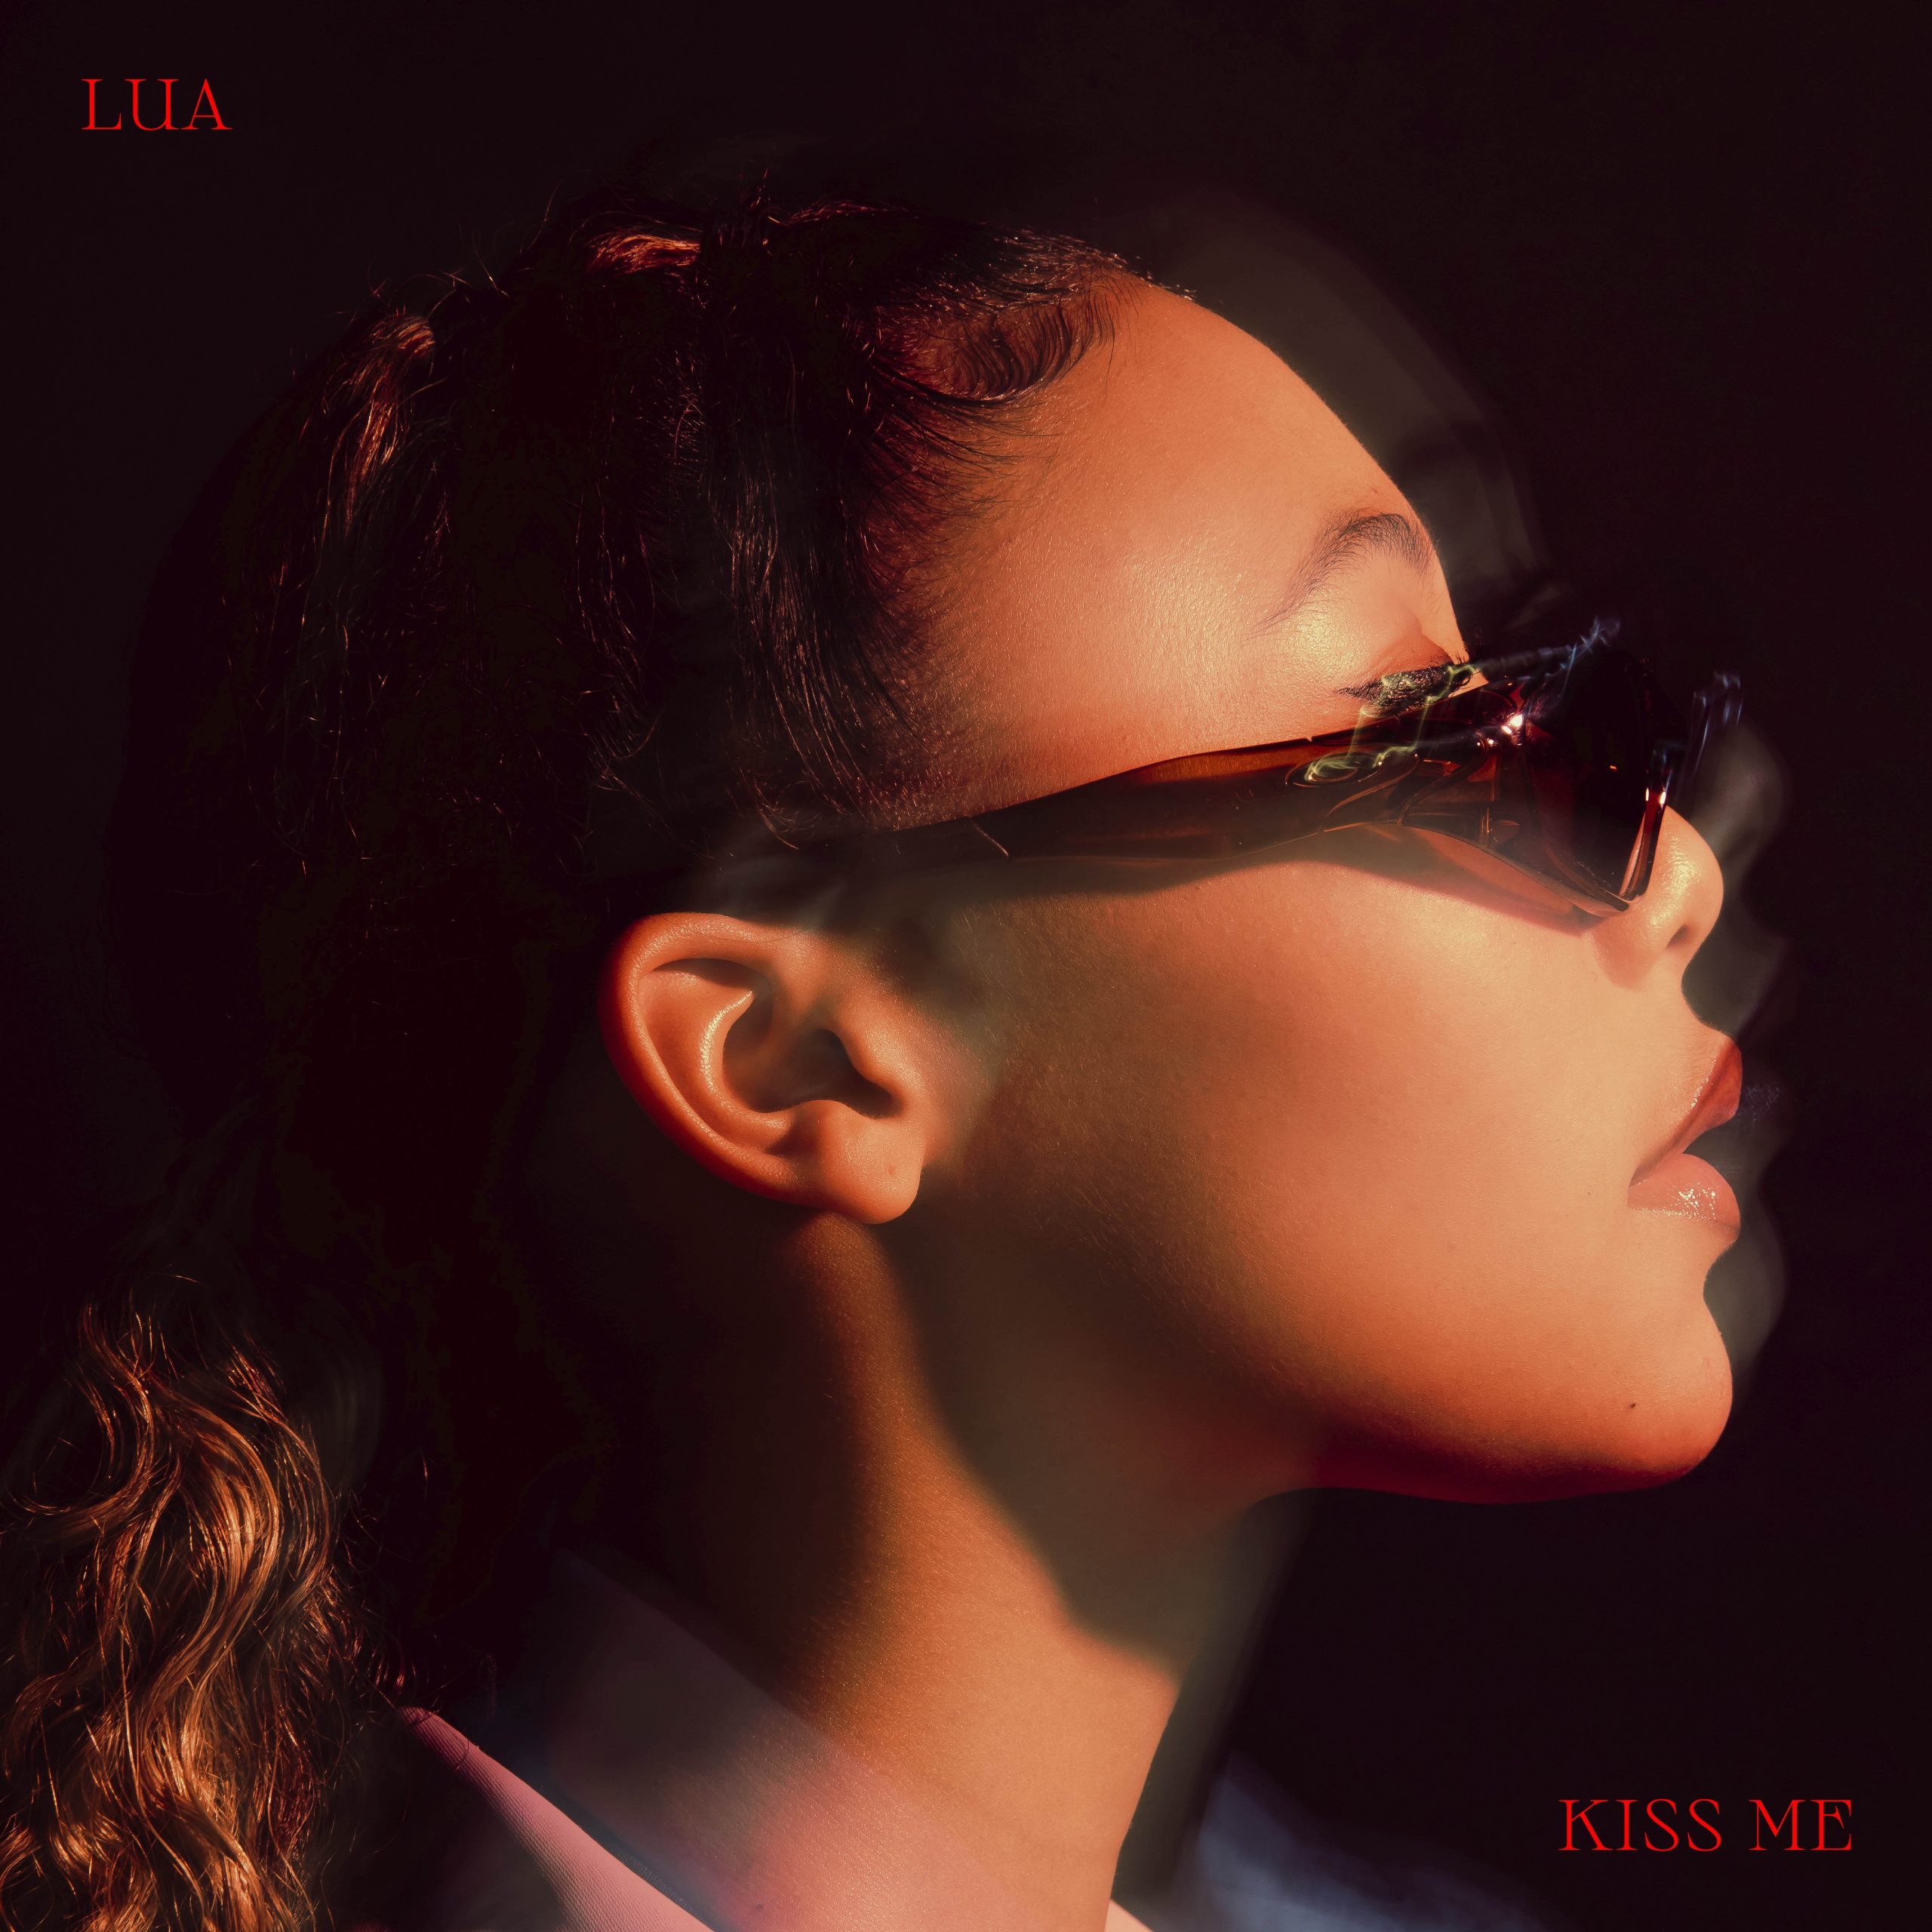 LUA Kiss Me debut single